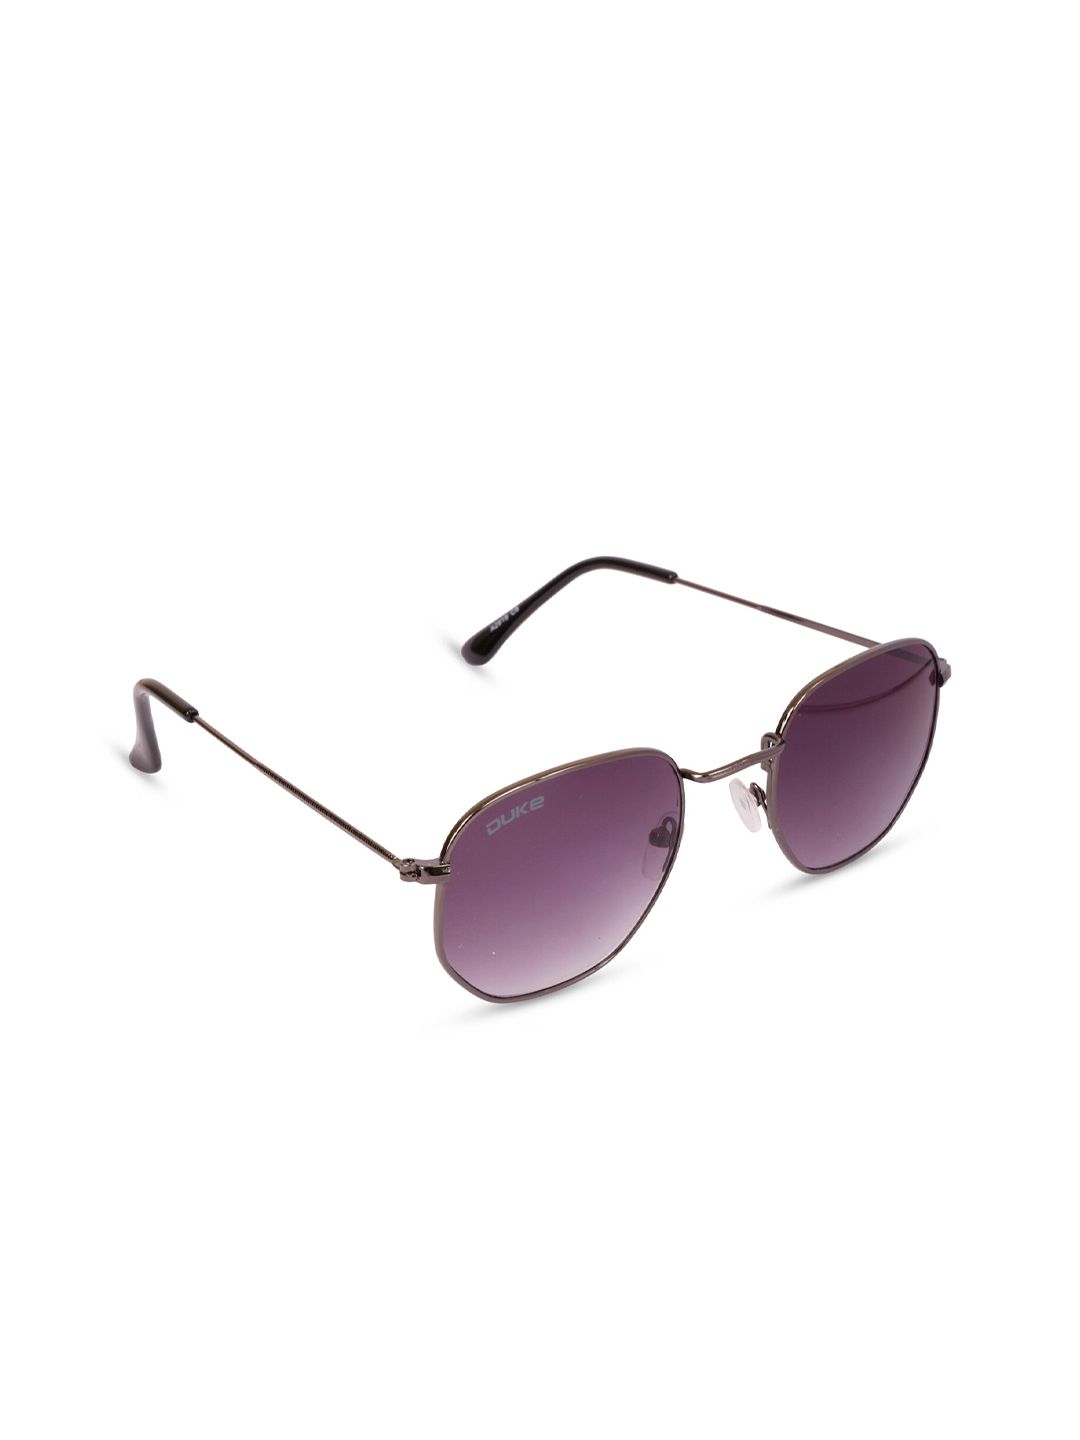 Duke Unisex Purple Lens & Gunmetal-Toned UV Protected Rectangle Sunglasses DUKE-A2919-C8 Price in India